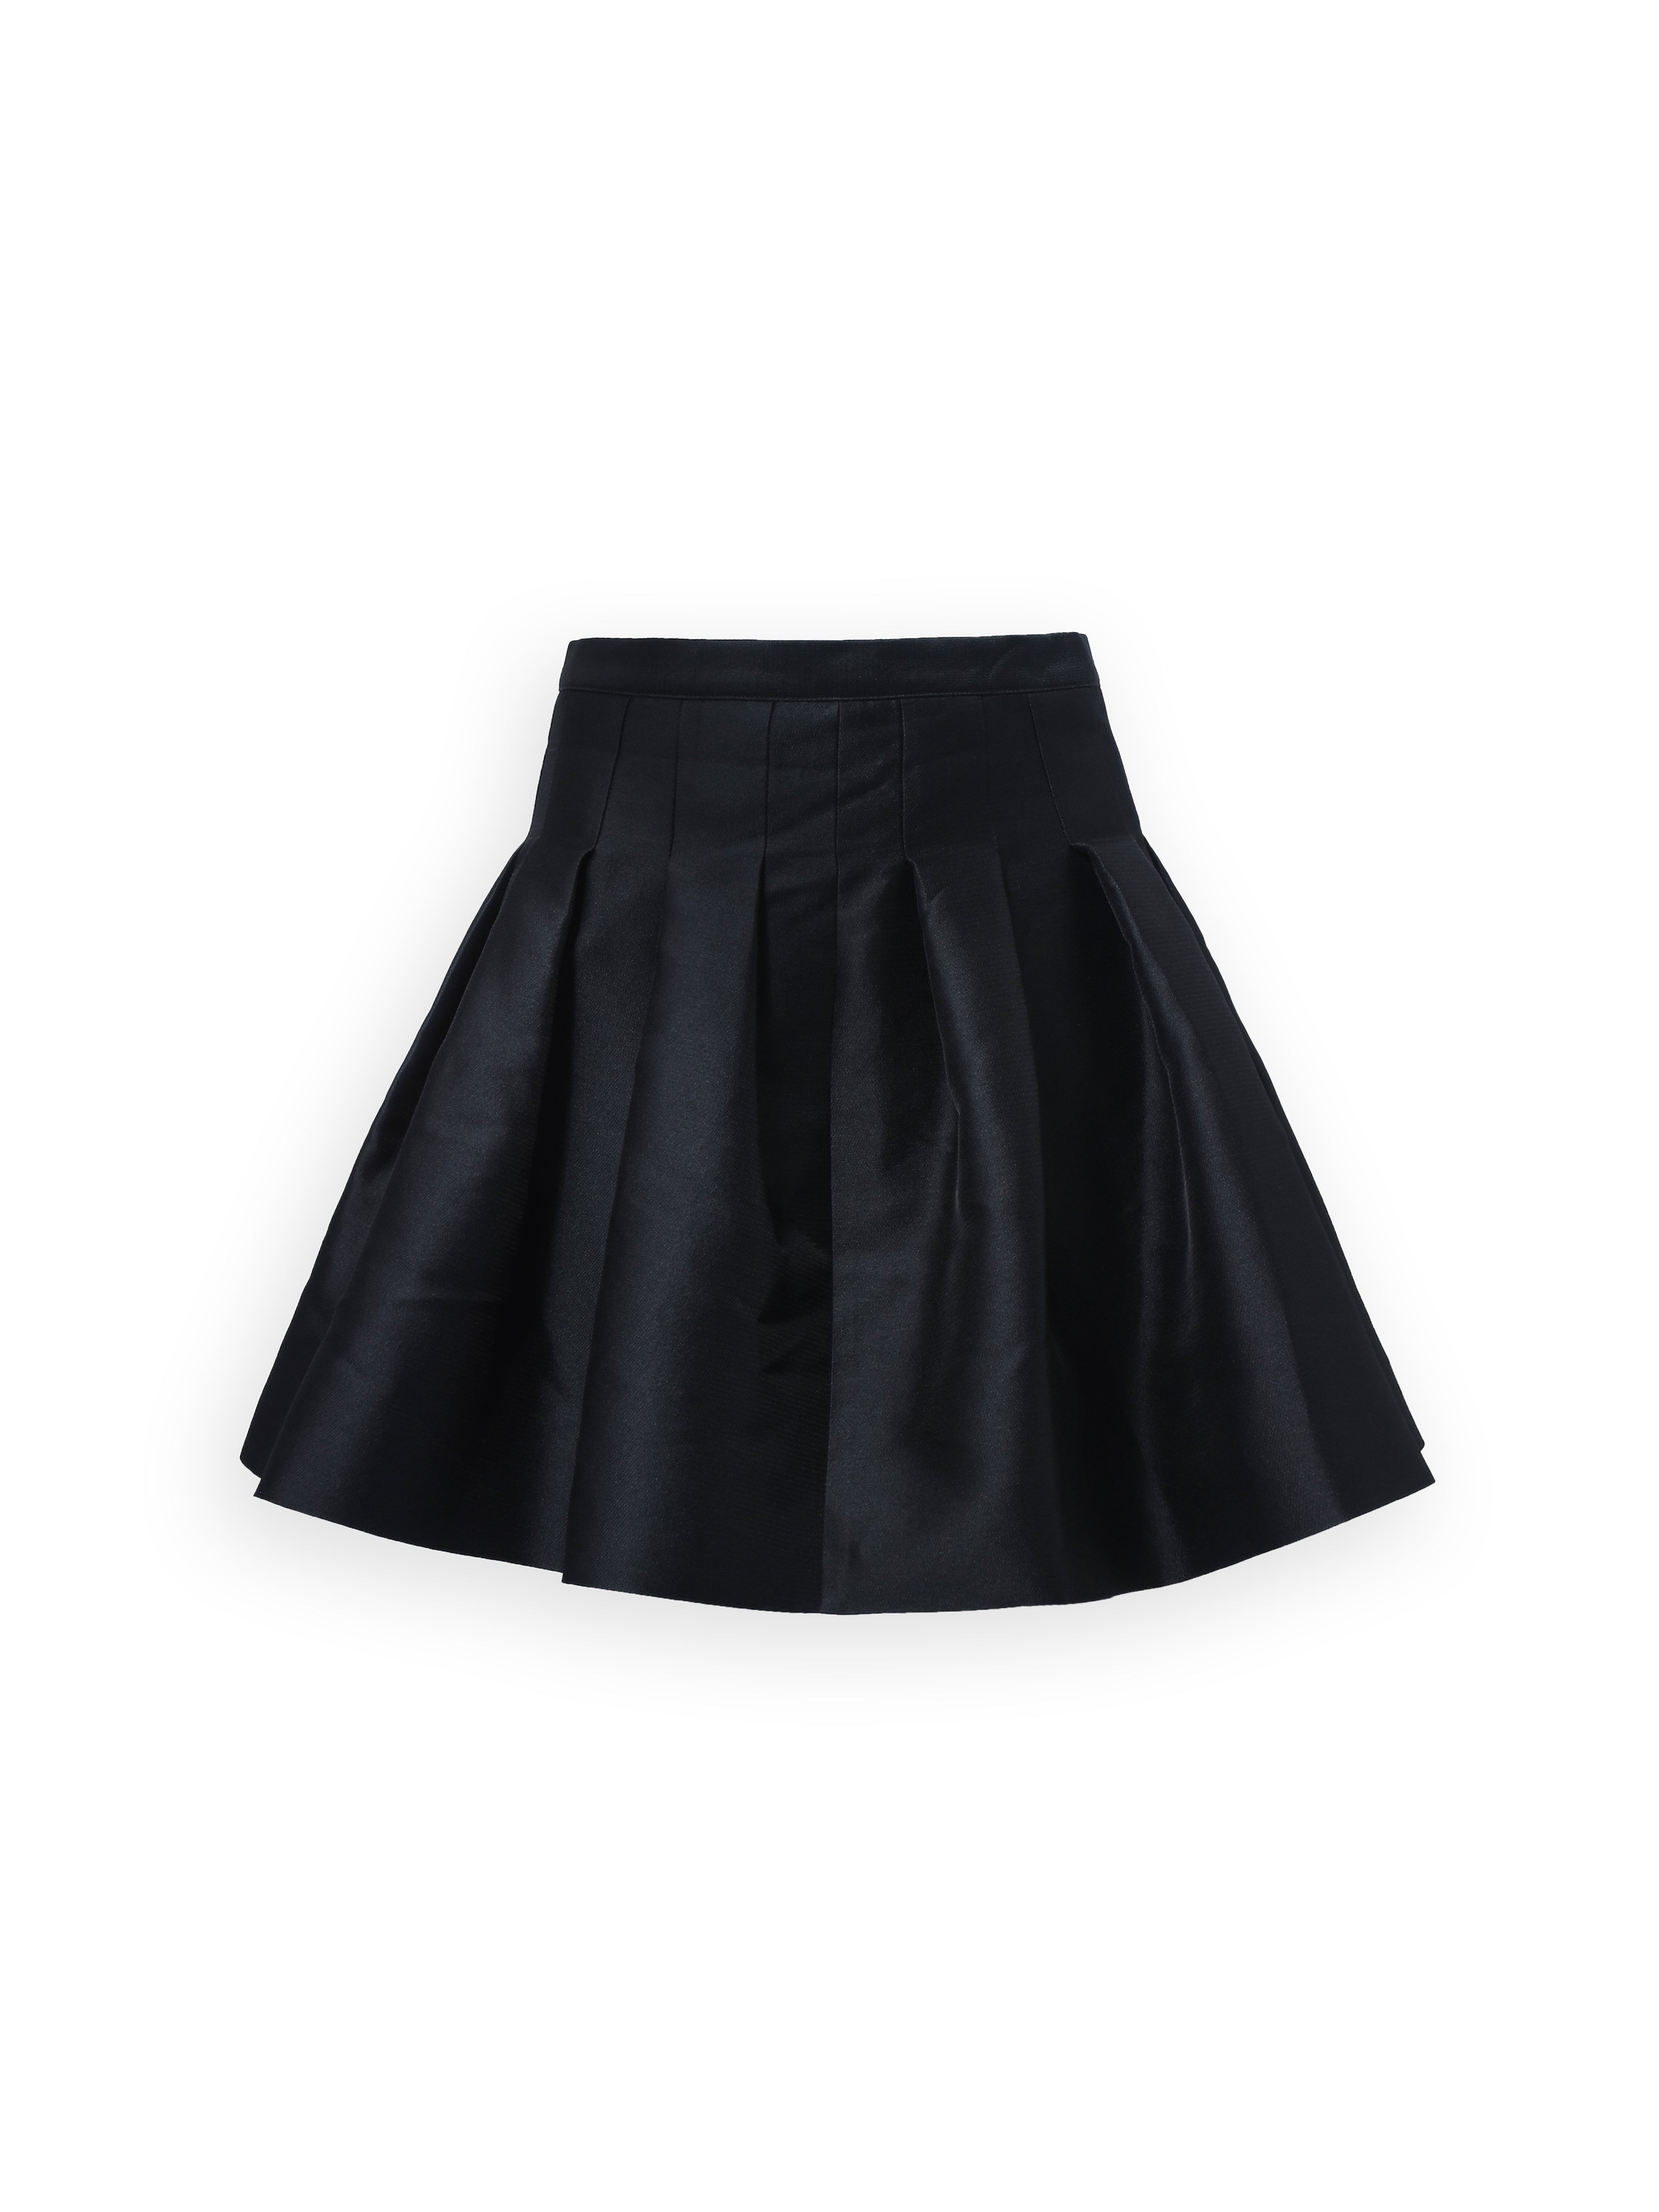 Black High Waist Box Pleated Short Bell Skirt